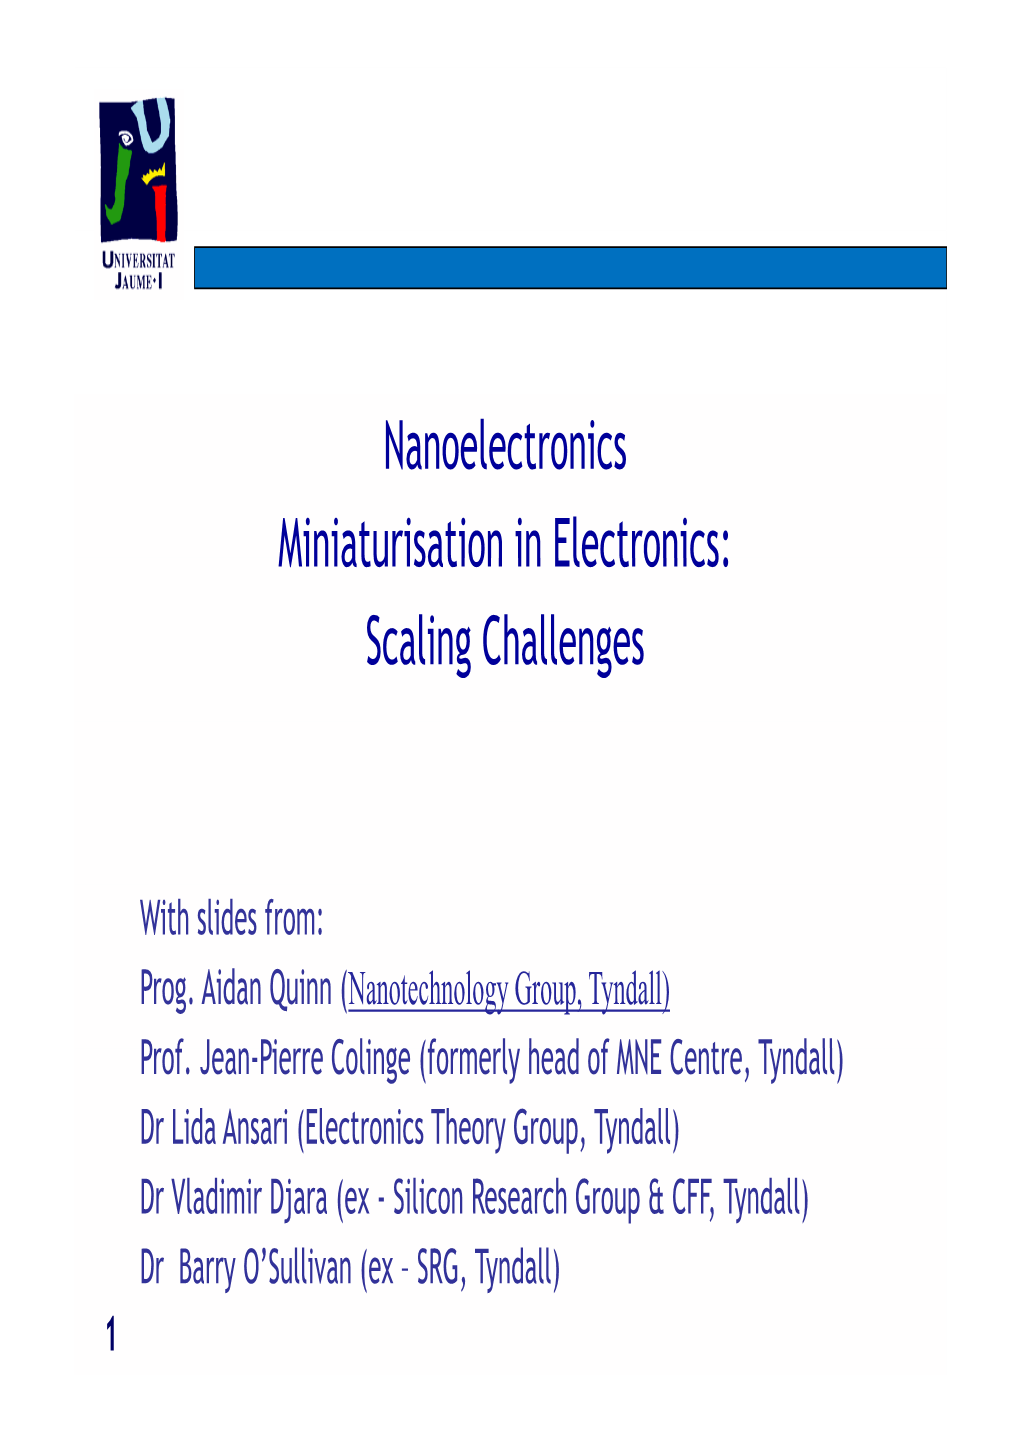 Nanoelectronics Miniaturisation in Electronics: Miniaturisation In